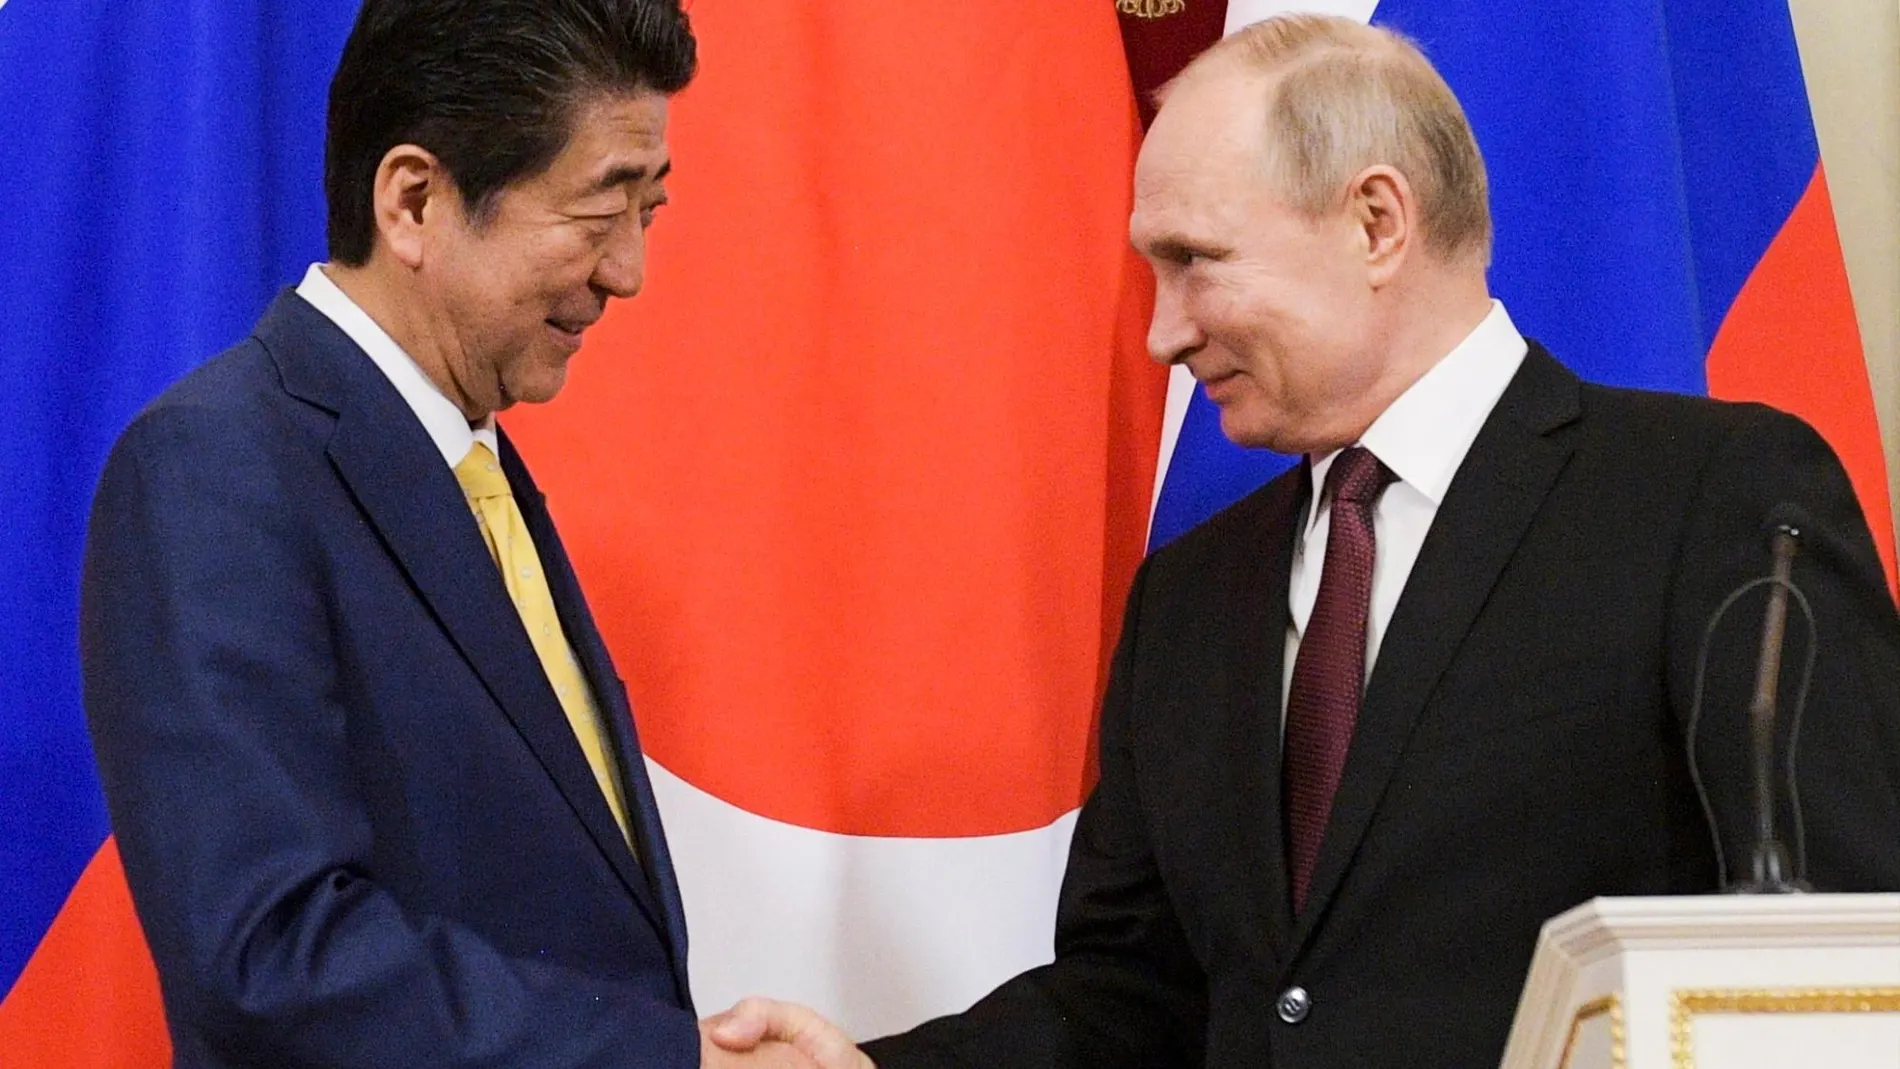 Shinzo Abe y Vladimir Putin estrechando las manos